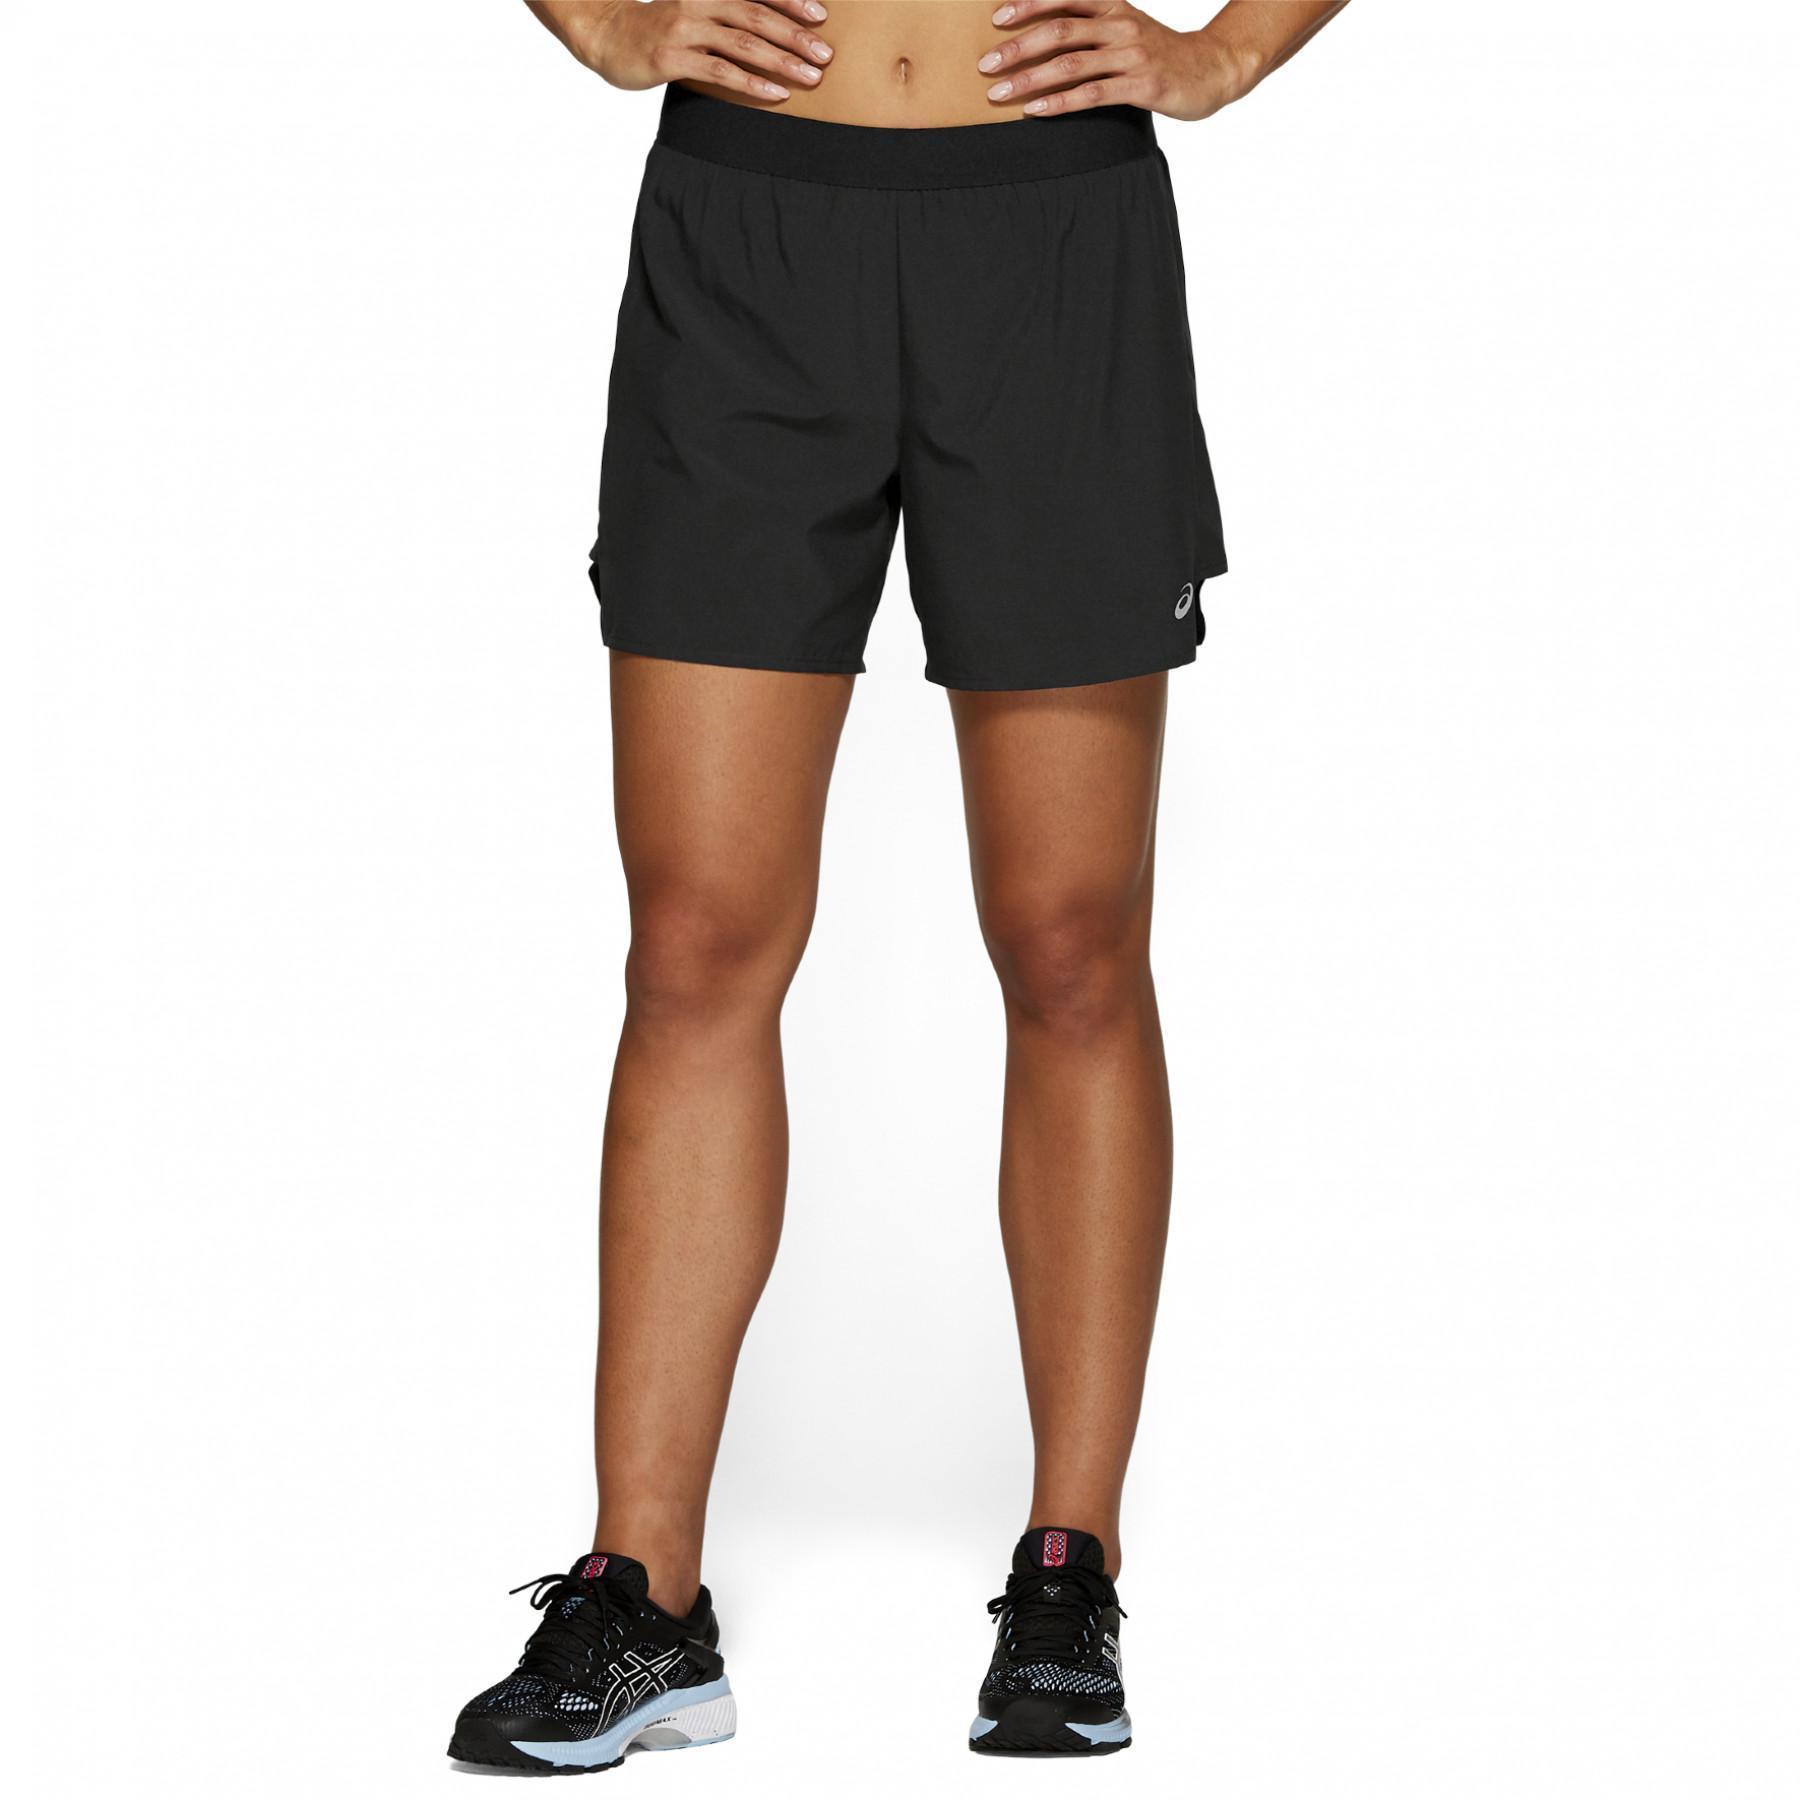 Women's shorts Asics 2 N 1 5.5in